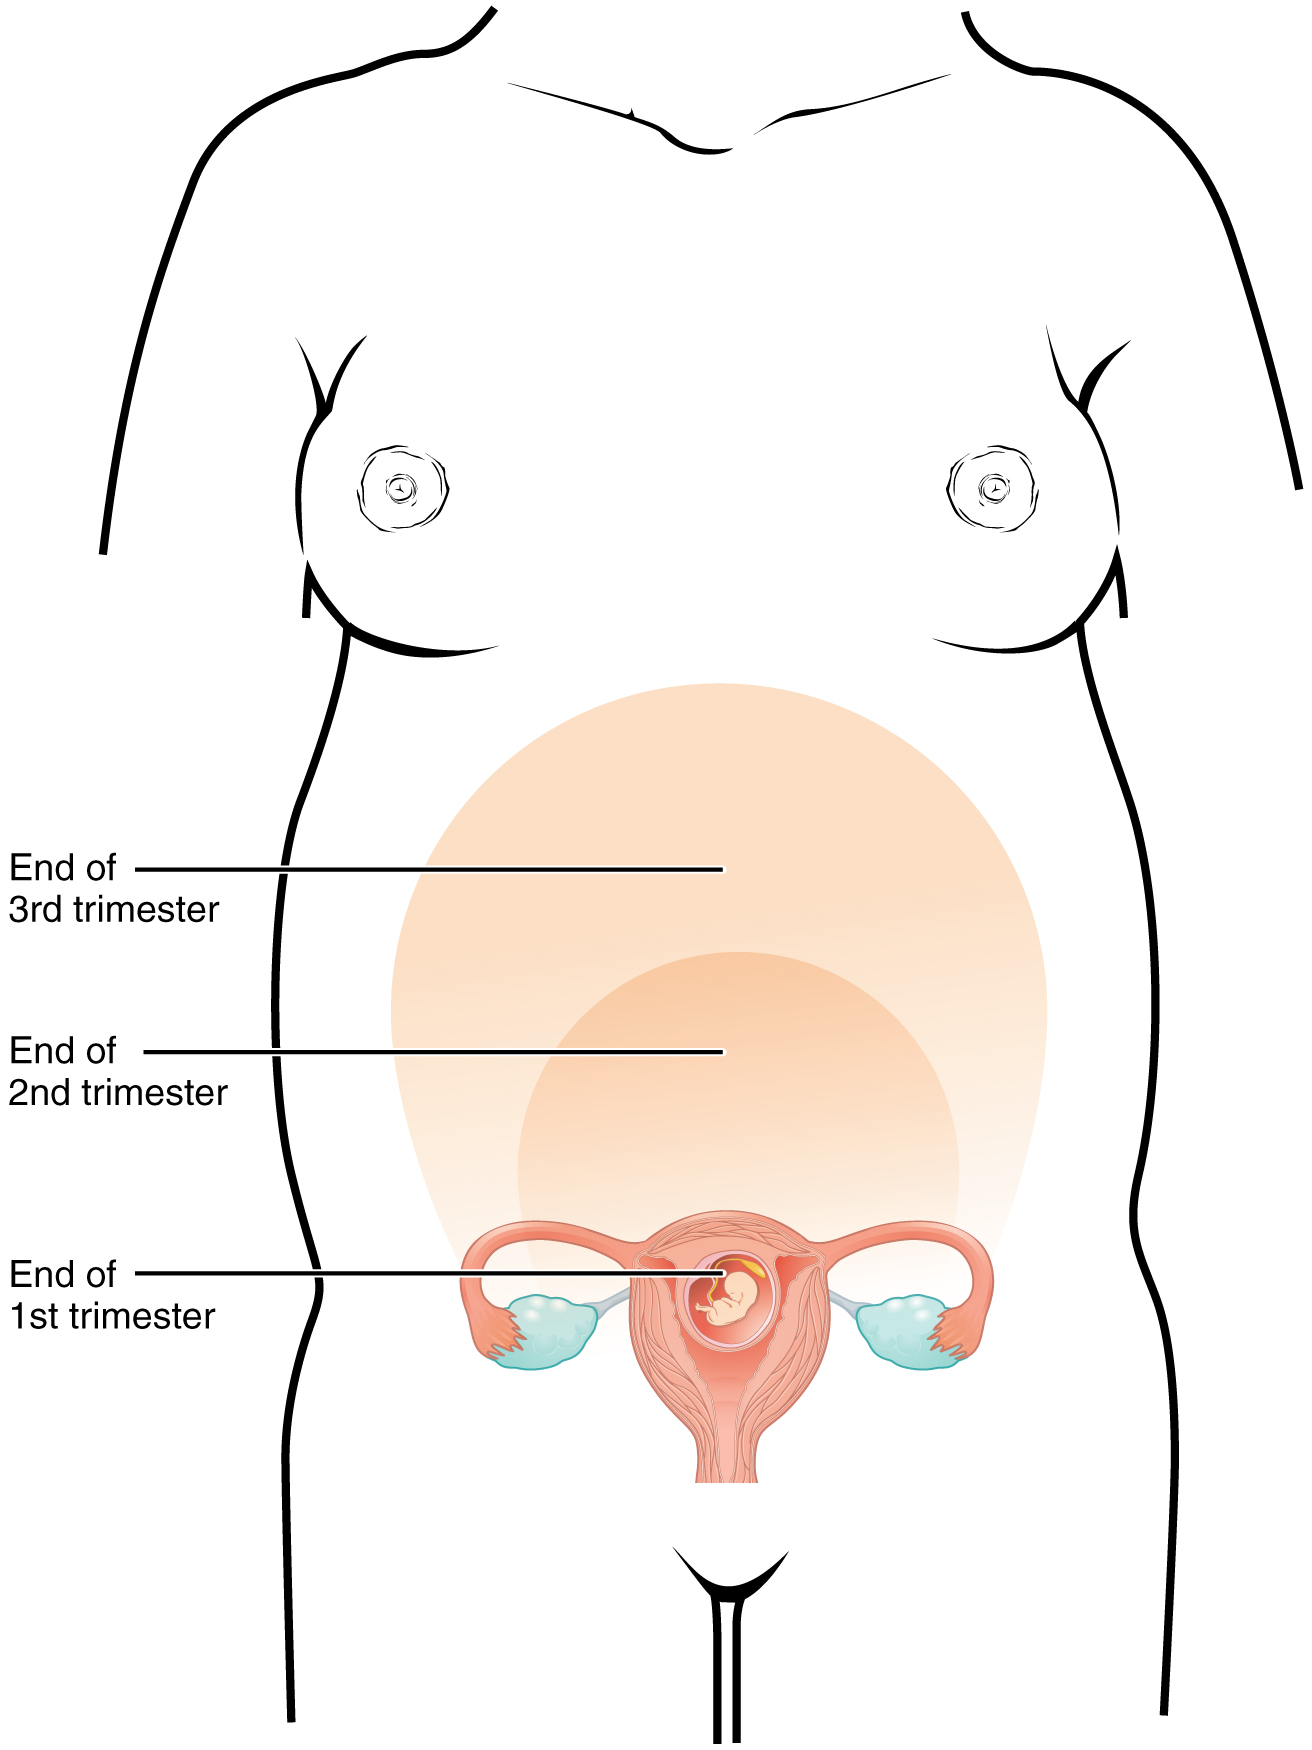 2917_Size_of_Uterus_Throughout_Pregnancy-02.jpg